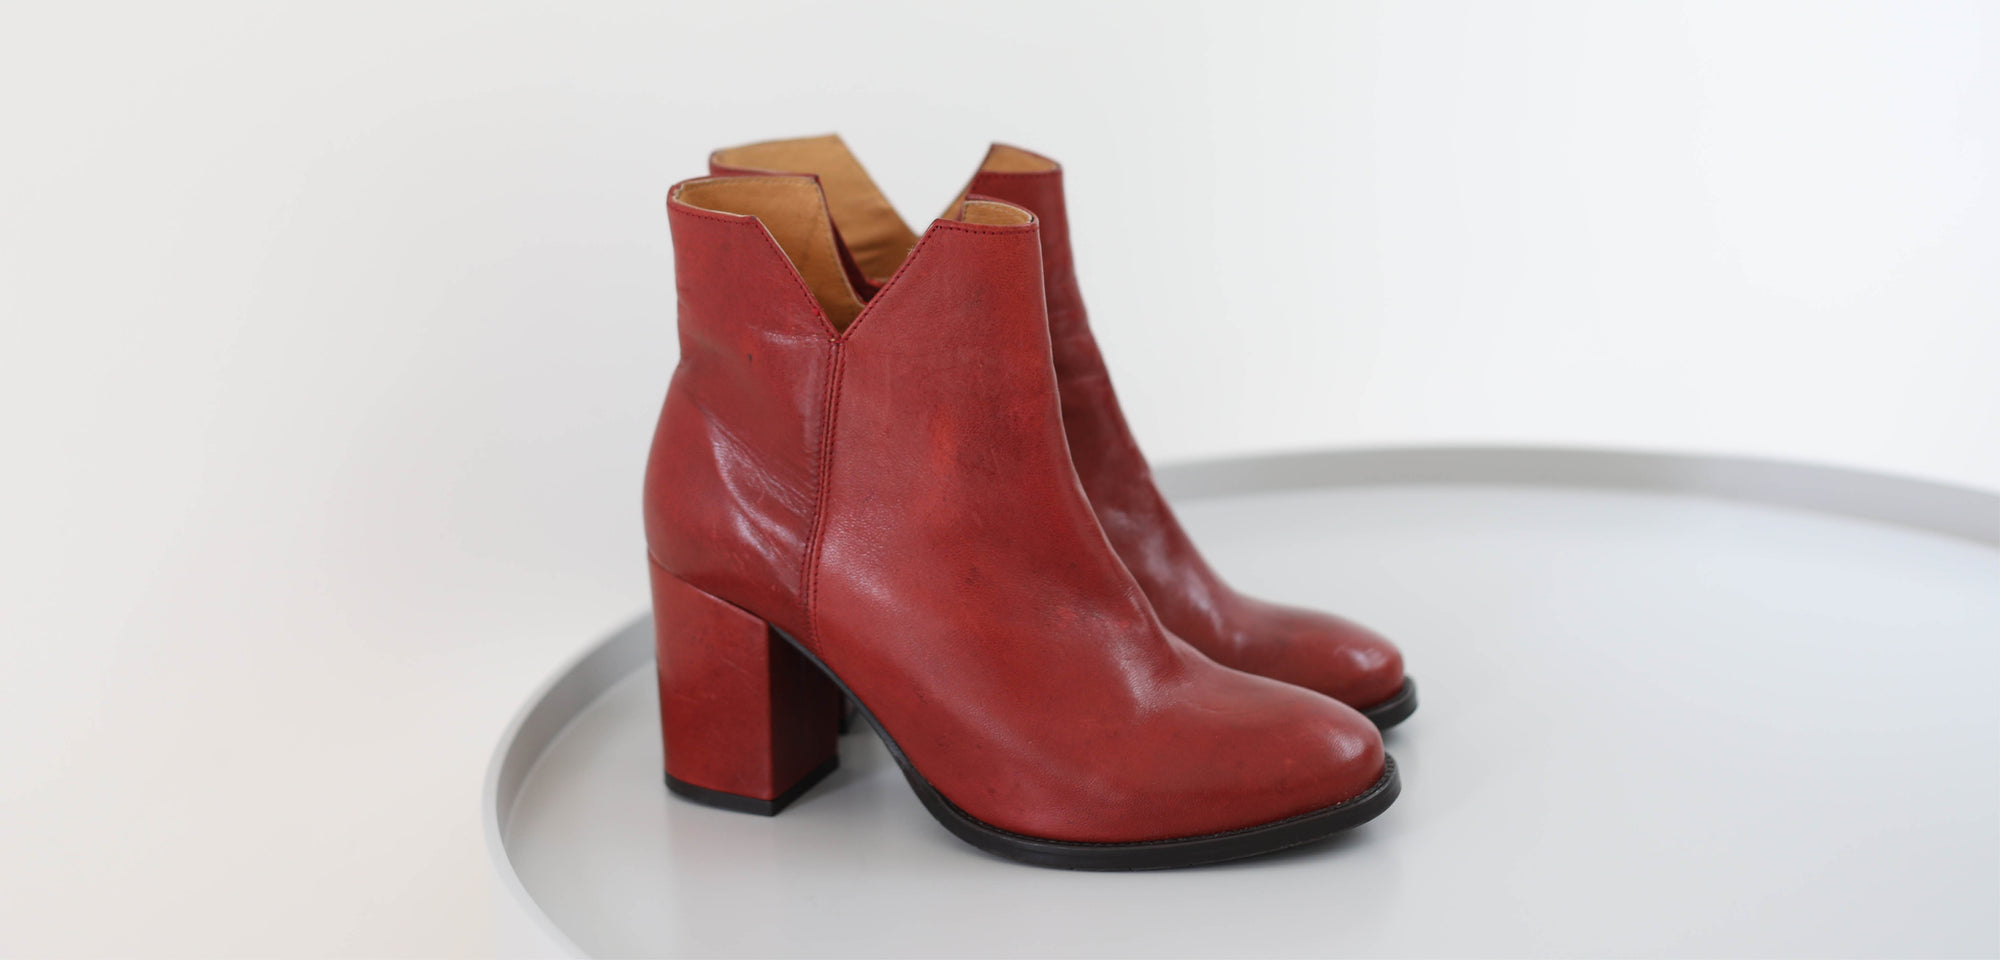 Esska Shoes, stylish urban shoes for confident women